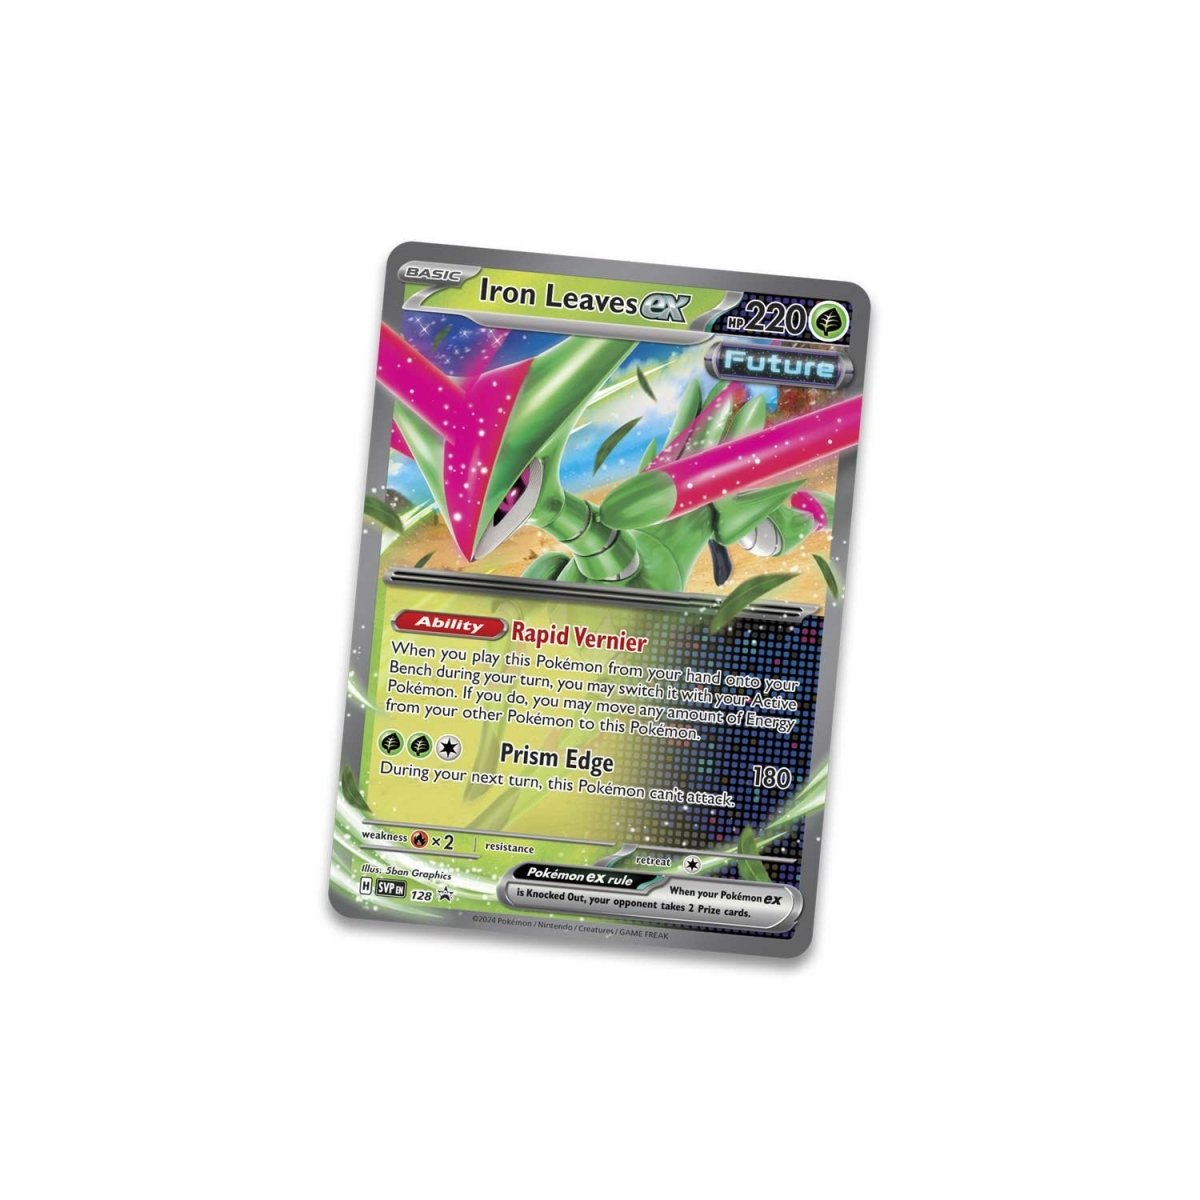 Pokémon TCG: Paradox Clash Tin (Iron Leaves ex)